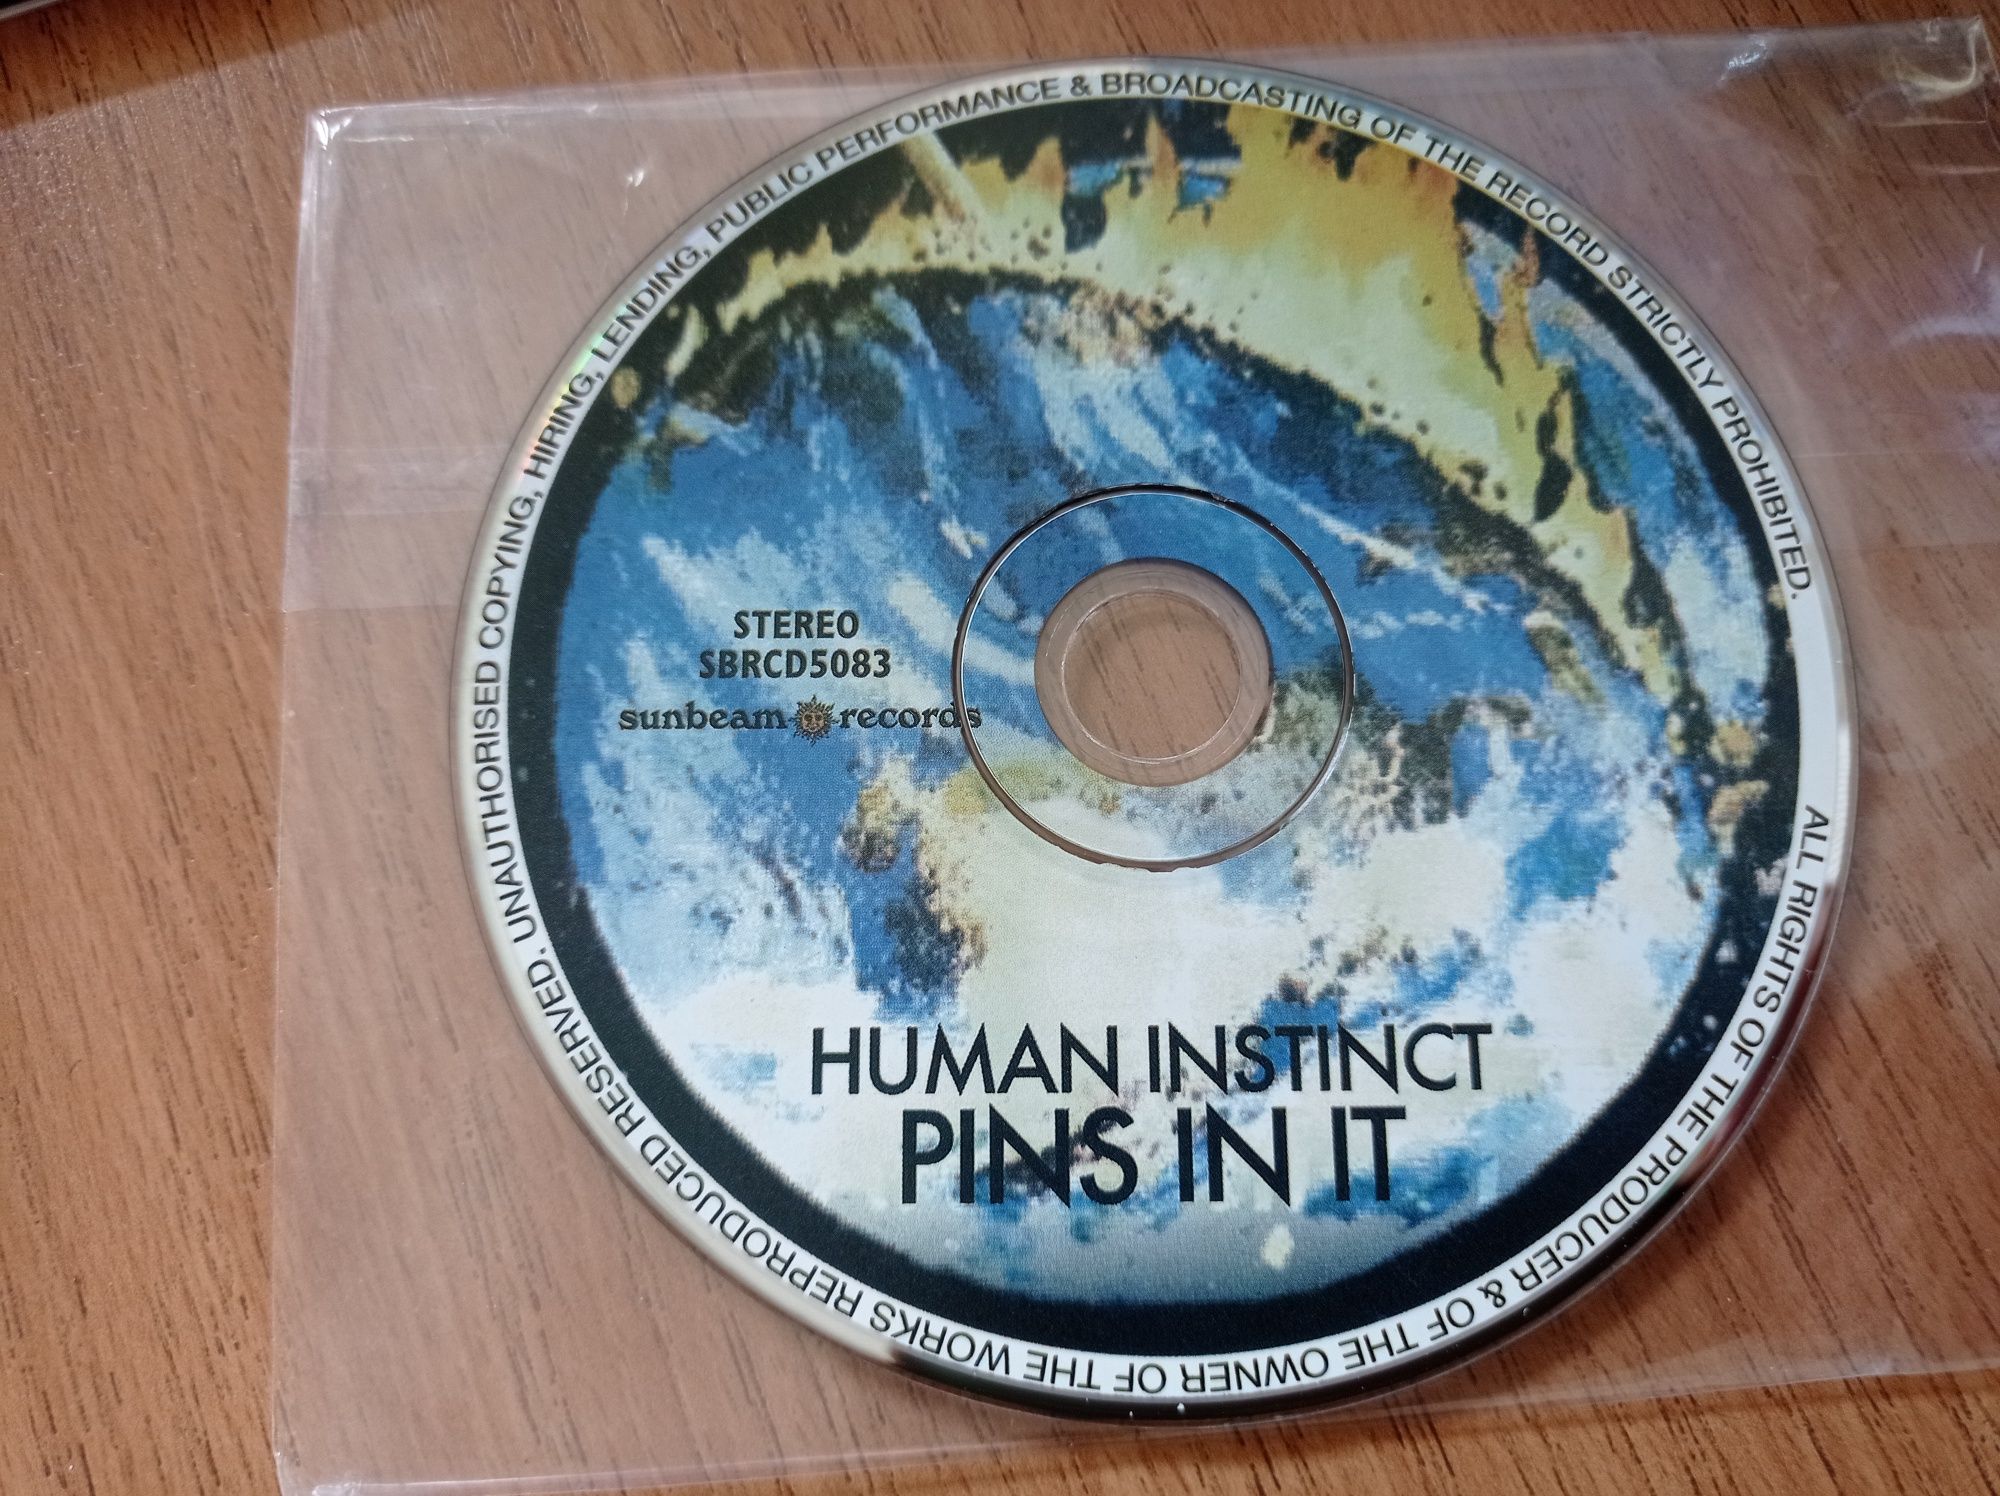 The Human Instinct - Pins on it